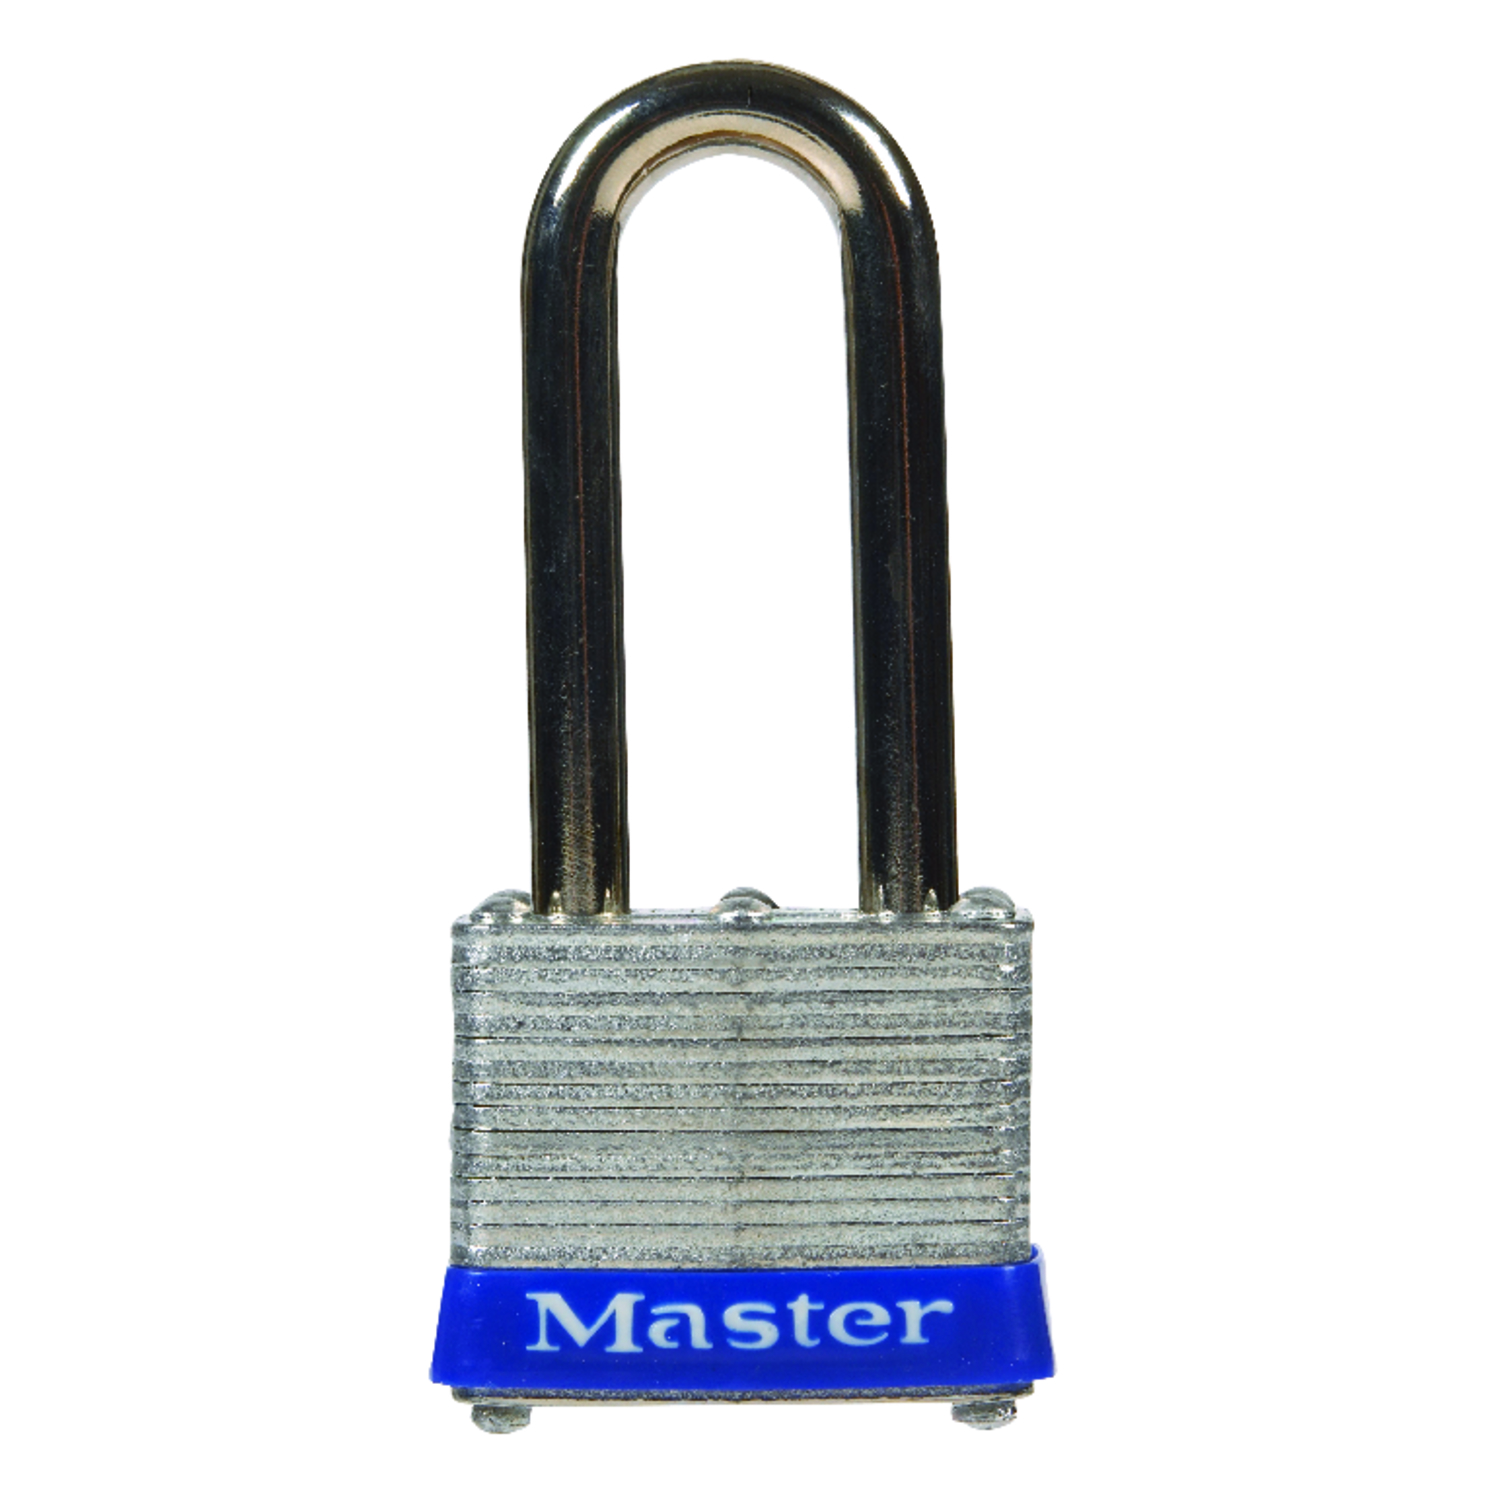 Master Lock 1-5/16 in. H X 1-5/8 in. W X 1-9/16 in. L Laminated Steel Double Locking Padlock